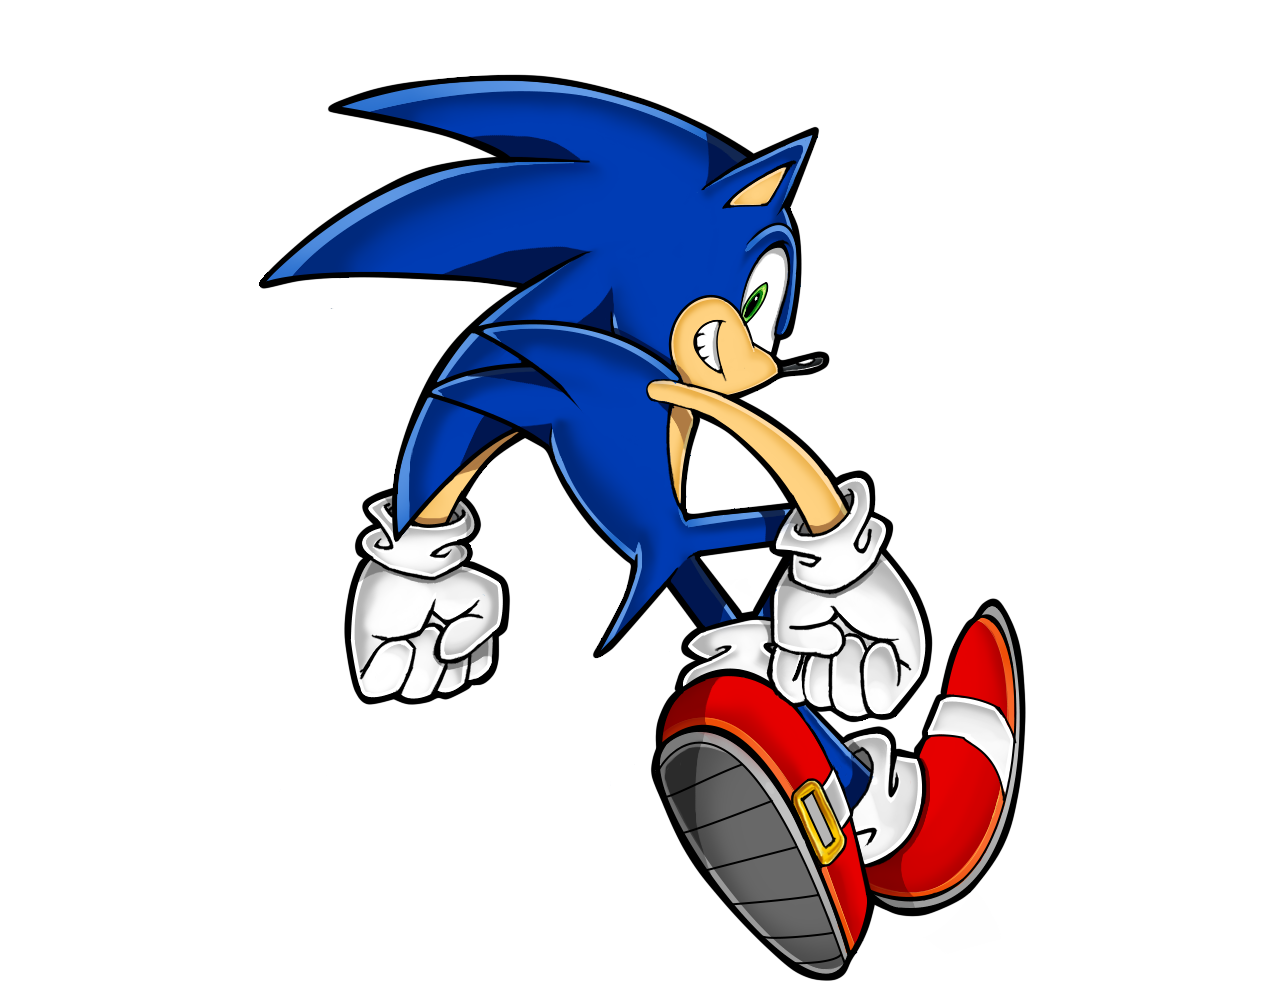 Movie Sonic in Adventure Style, Sonic Adventure Pose